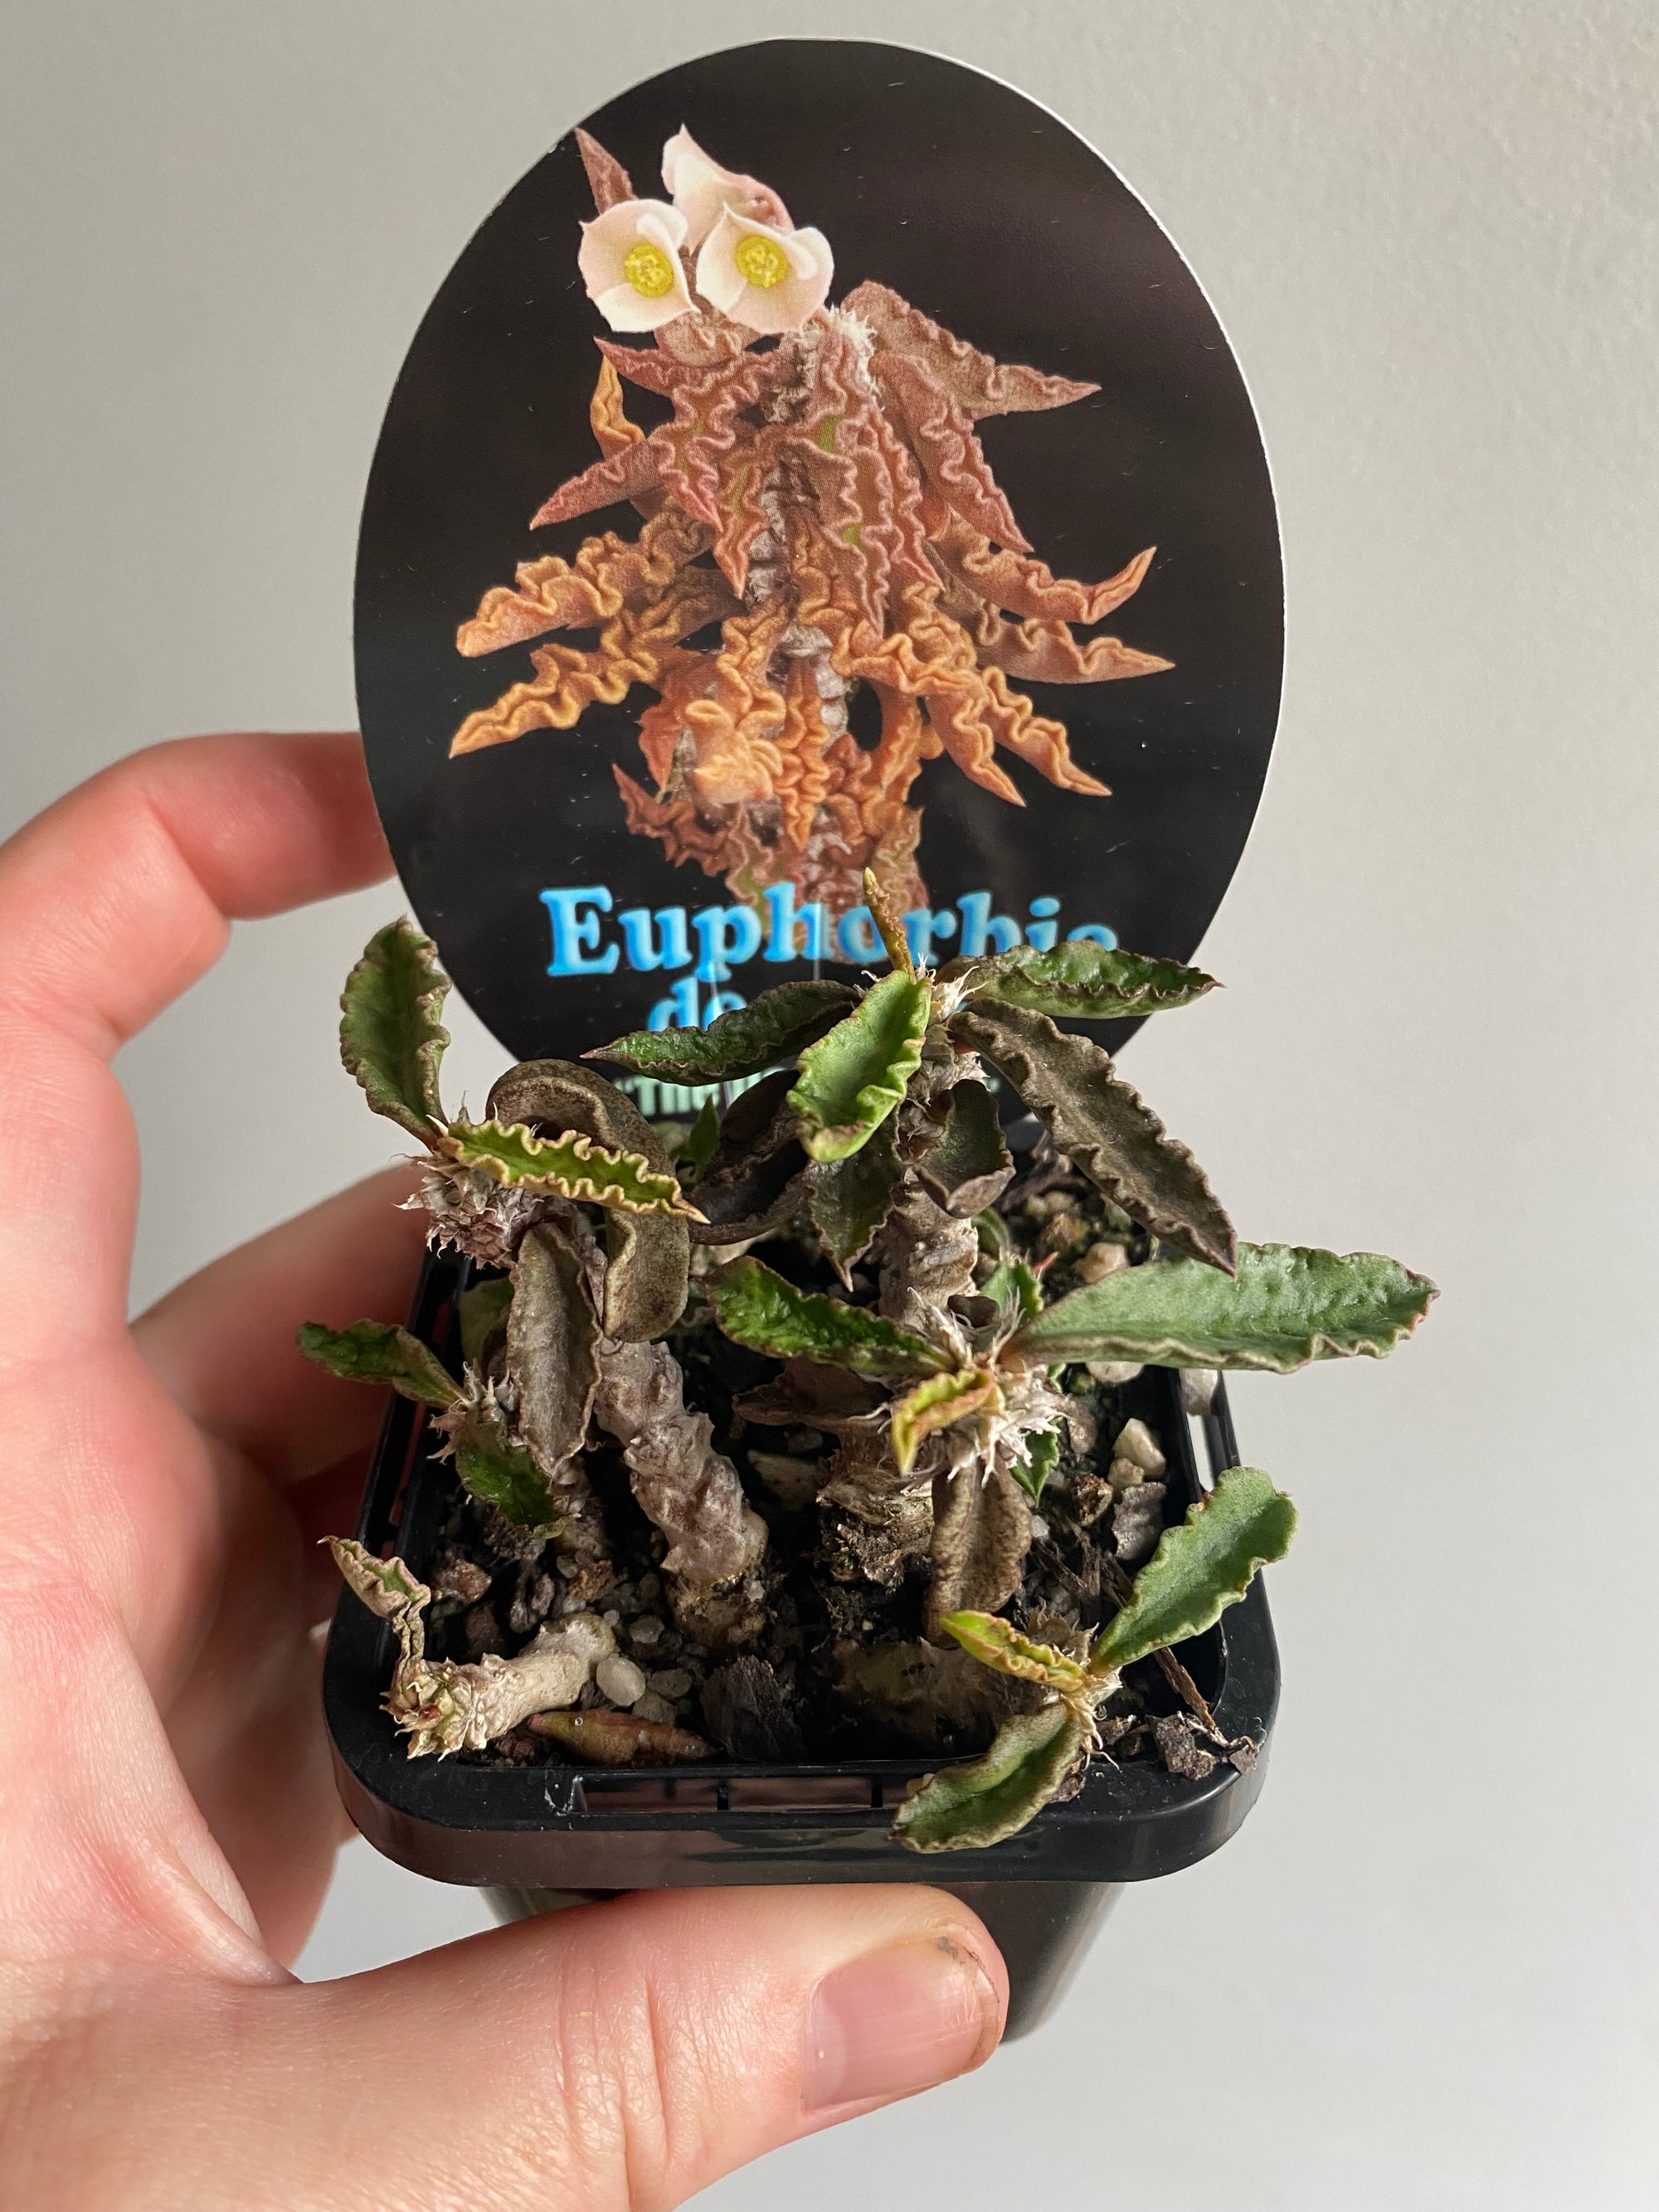 Euphorbia decaryi 'The Dead Plant'